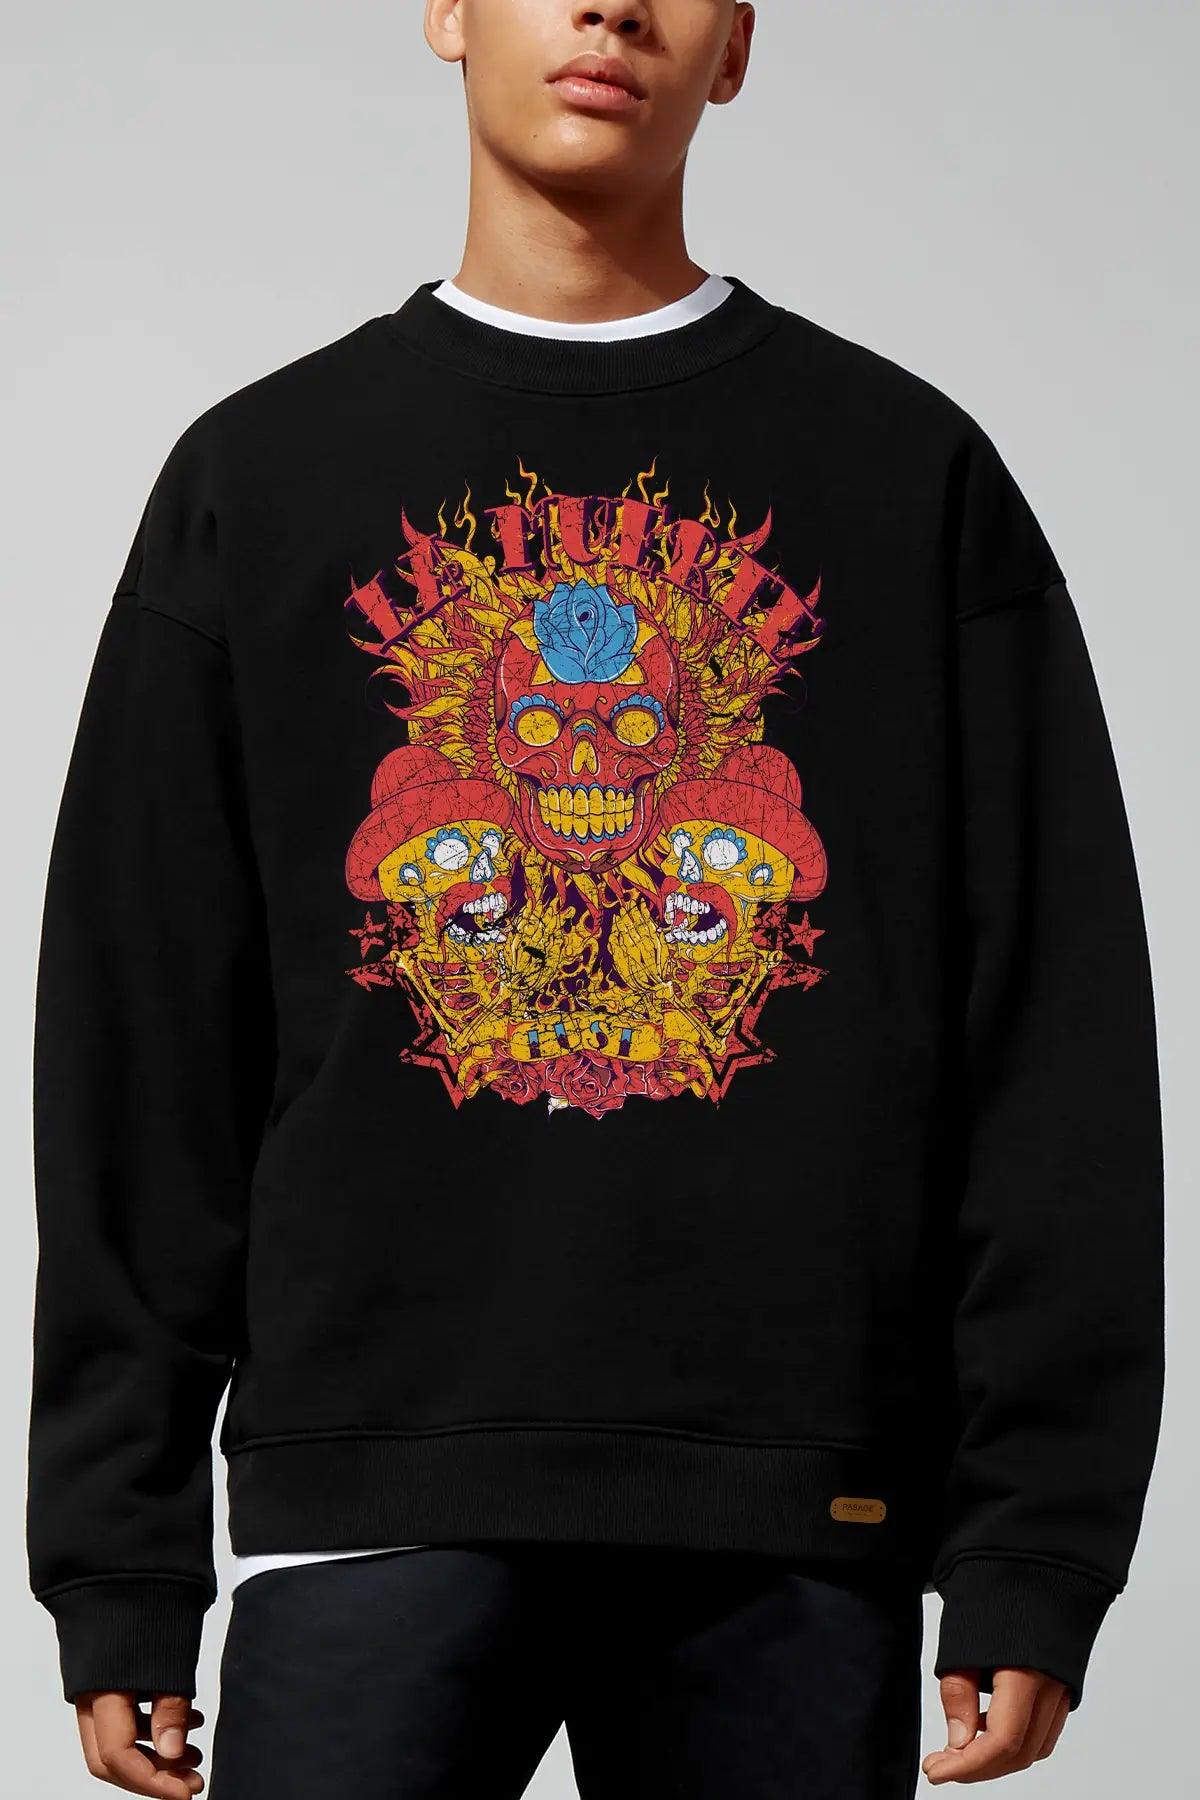 La Muerte Oversize Erkek Sweatshirt - PΛSΛGE